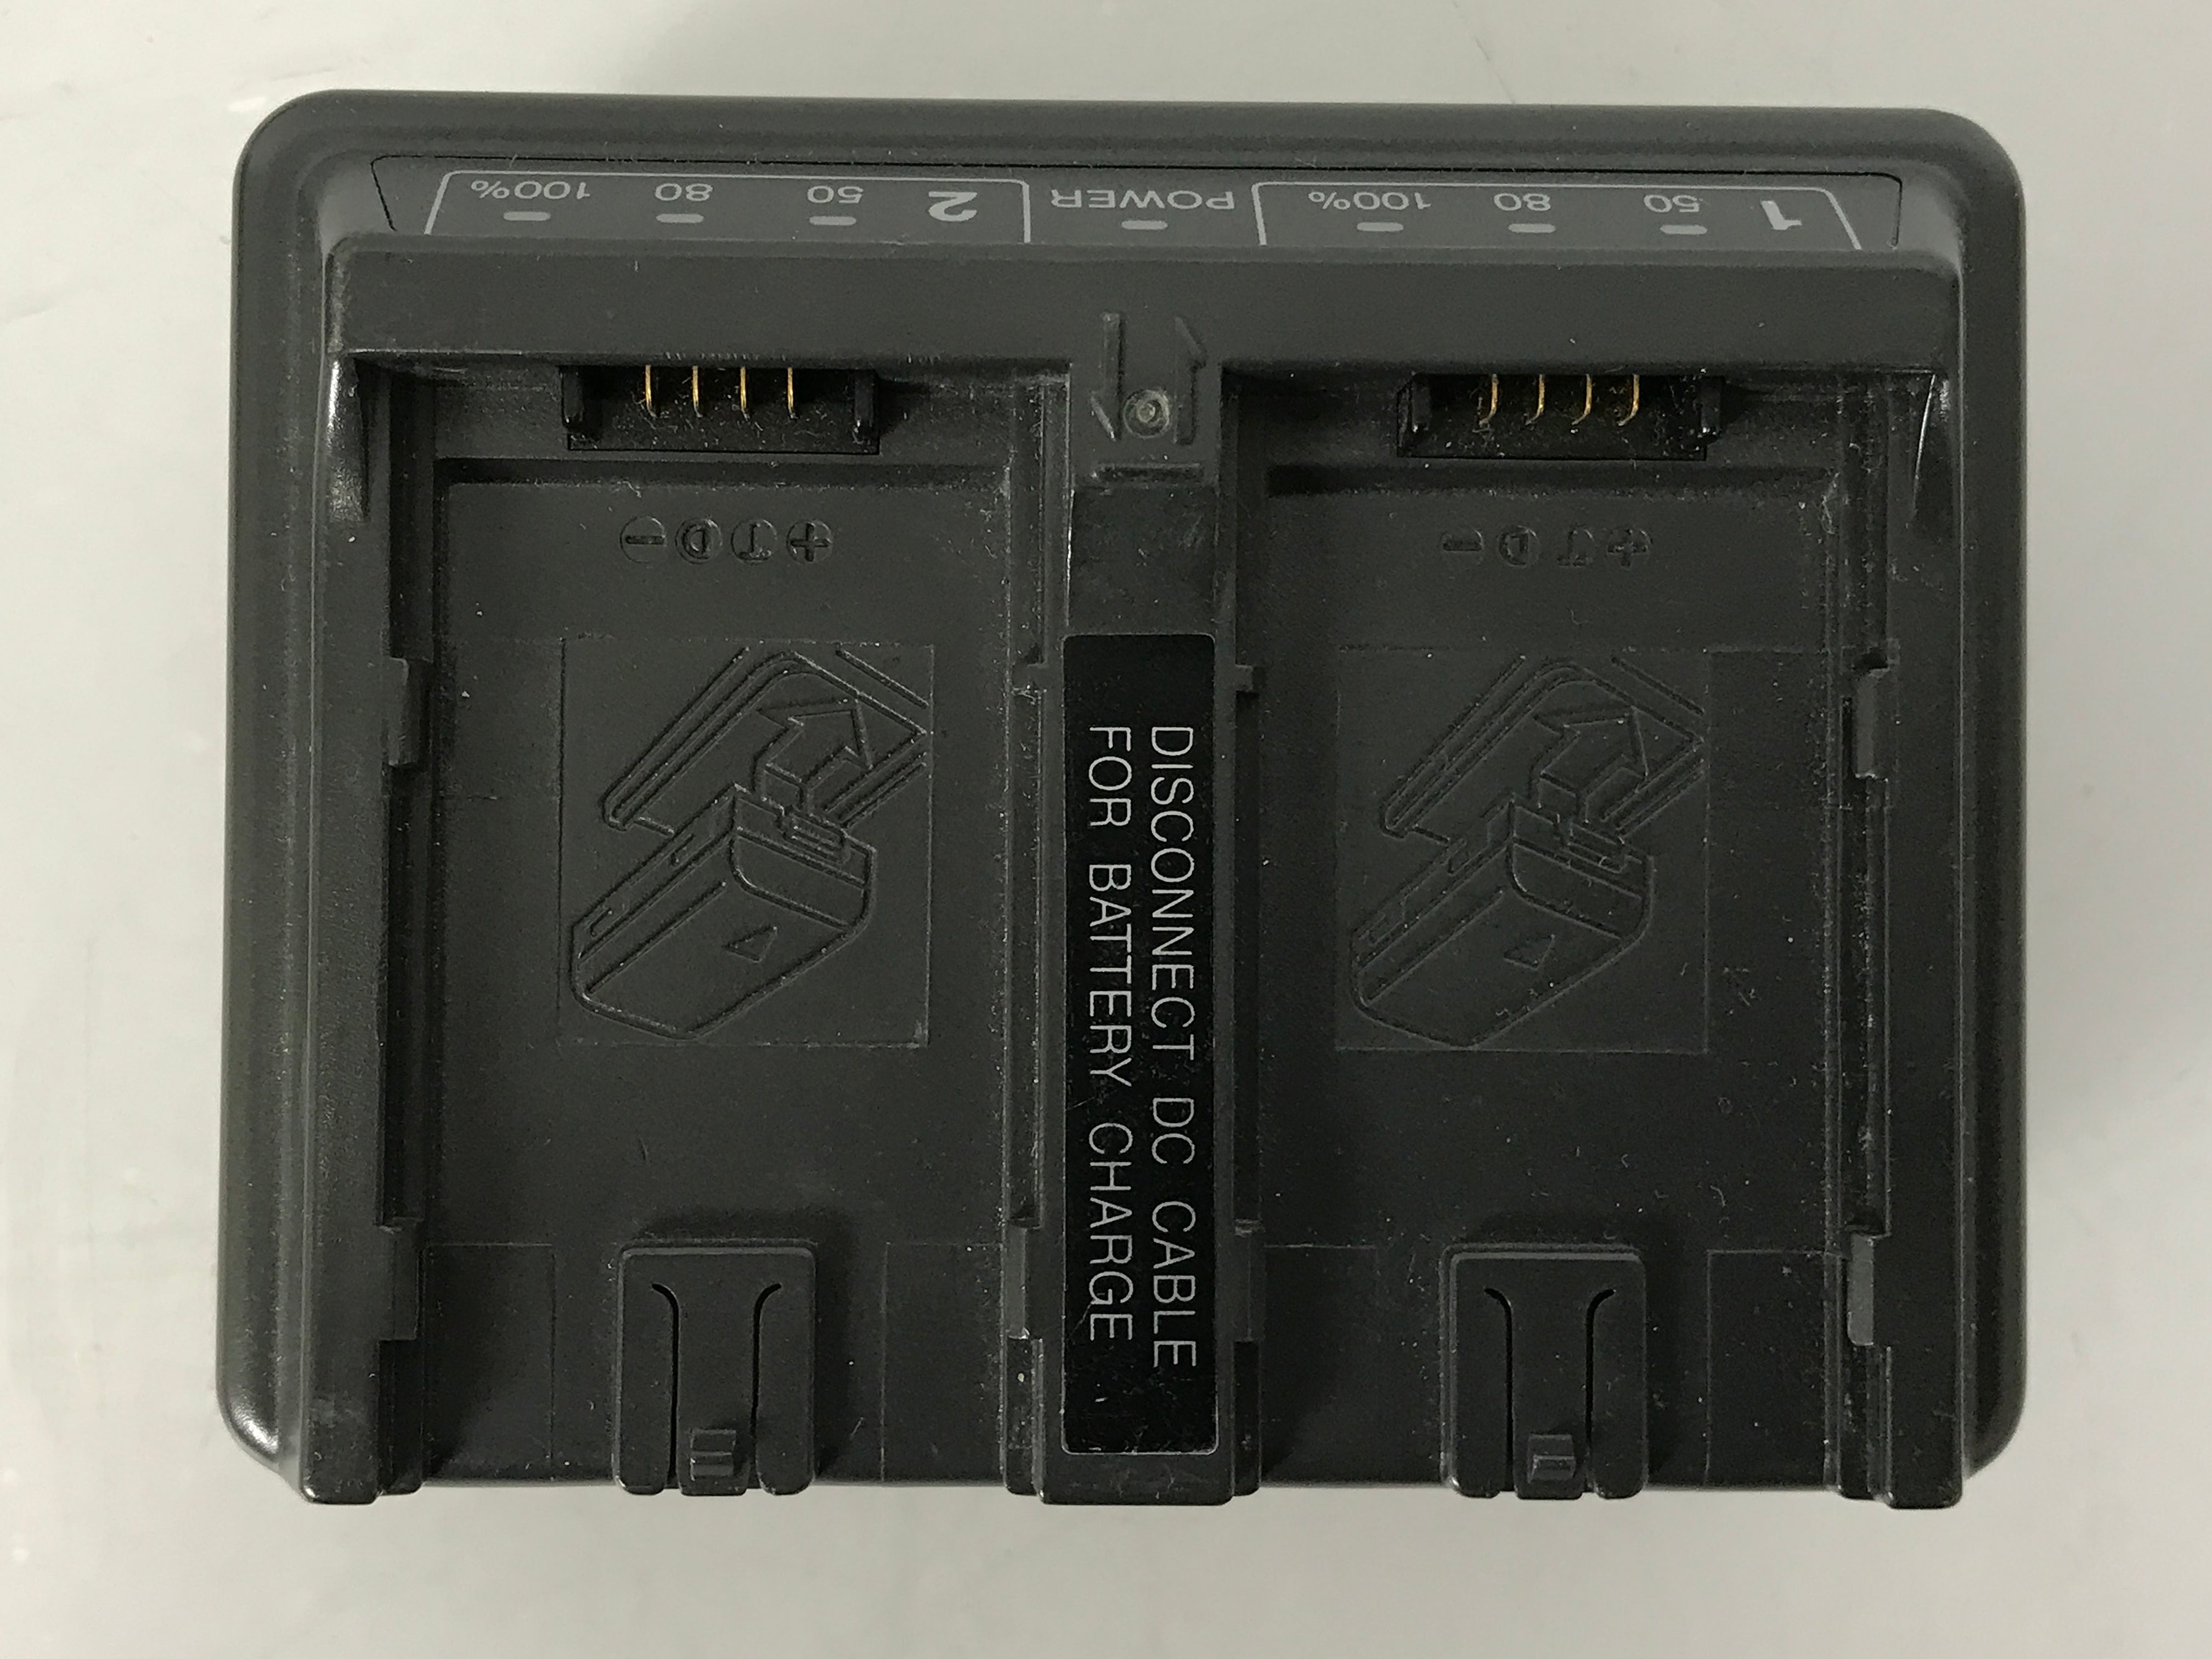 Panasonic PV-DV910D MiniDV Digital Camcorder w/ AC Adaptor & Remote